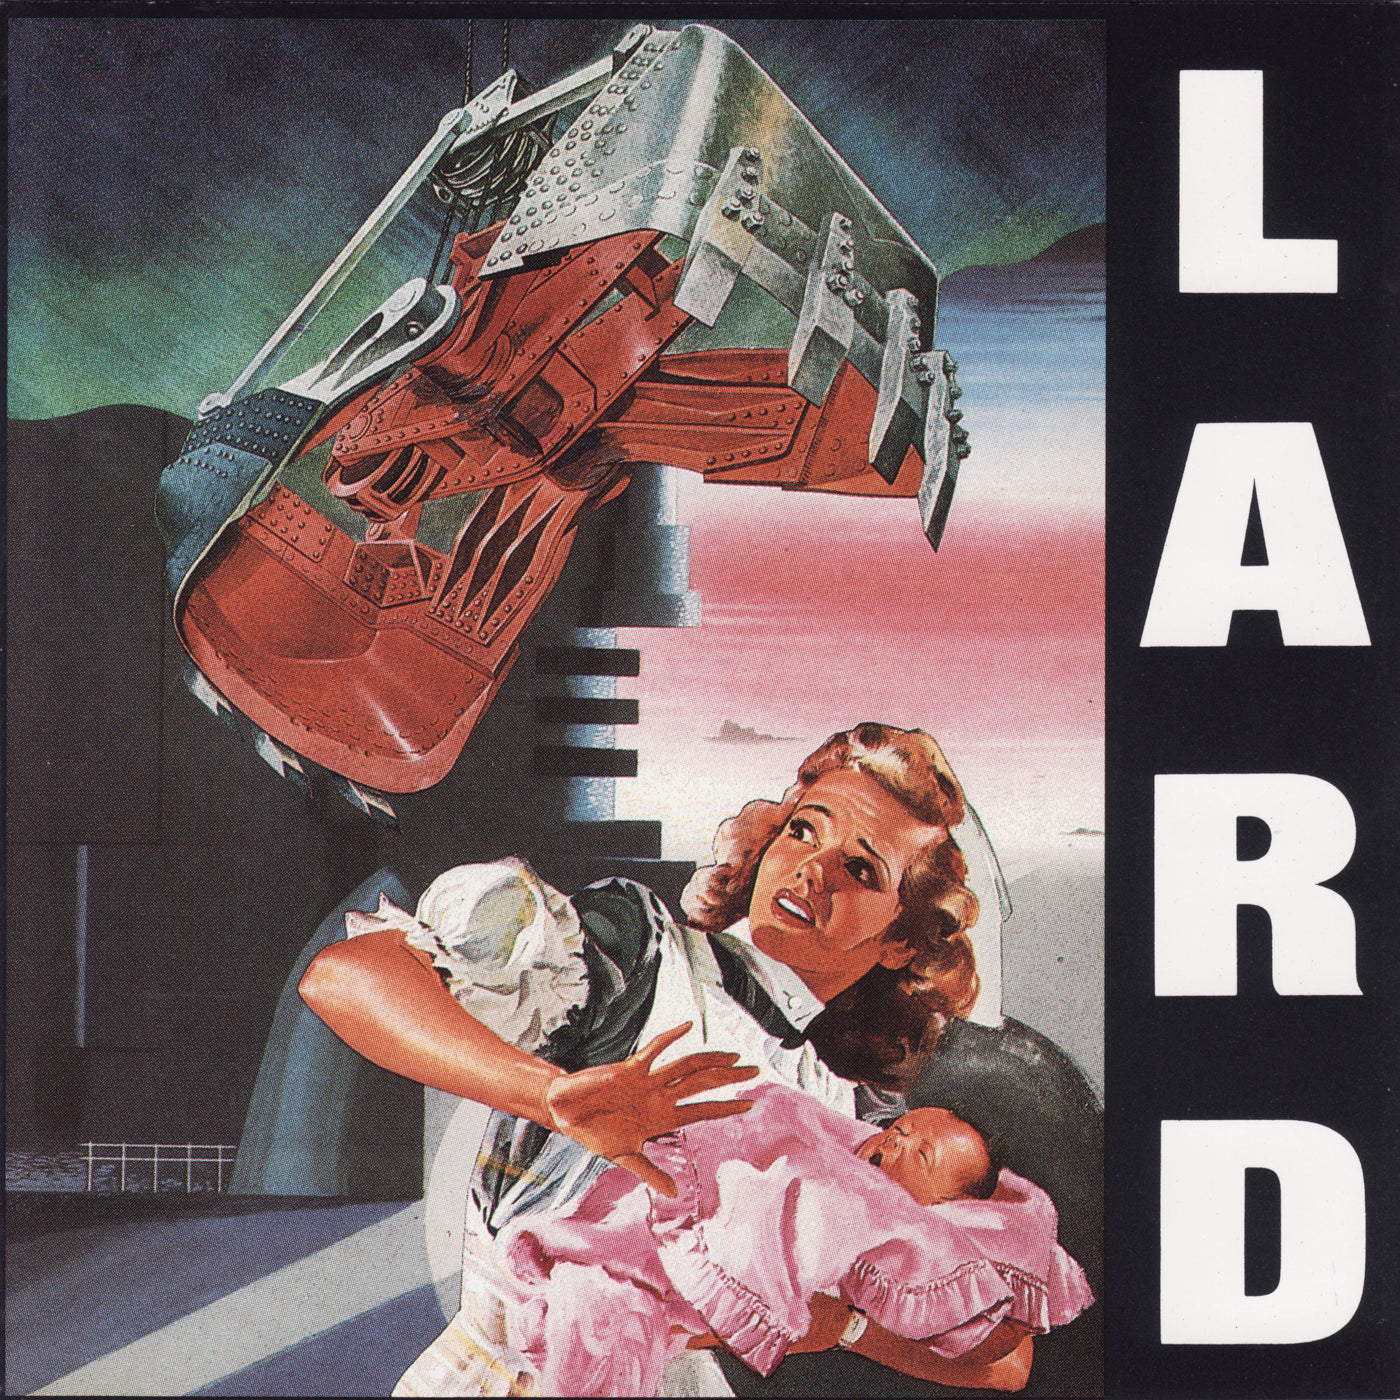 v84 - LARD - "The Last Temptation Of Reid"